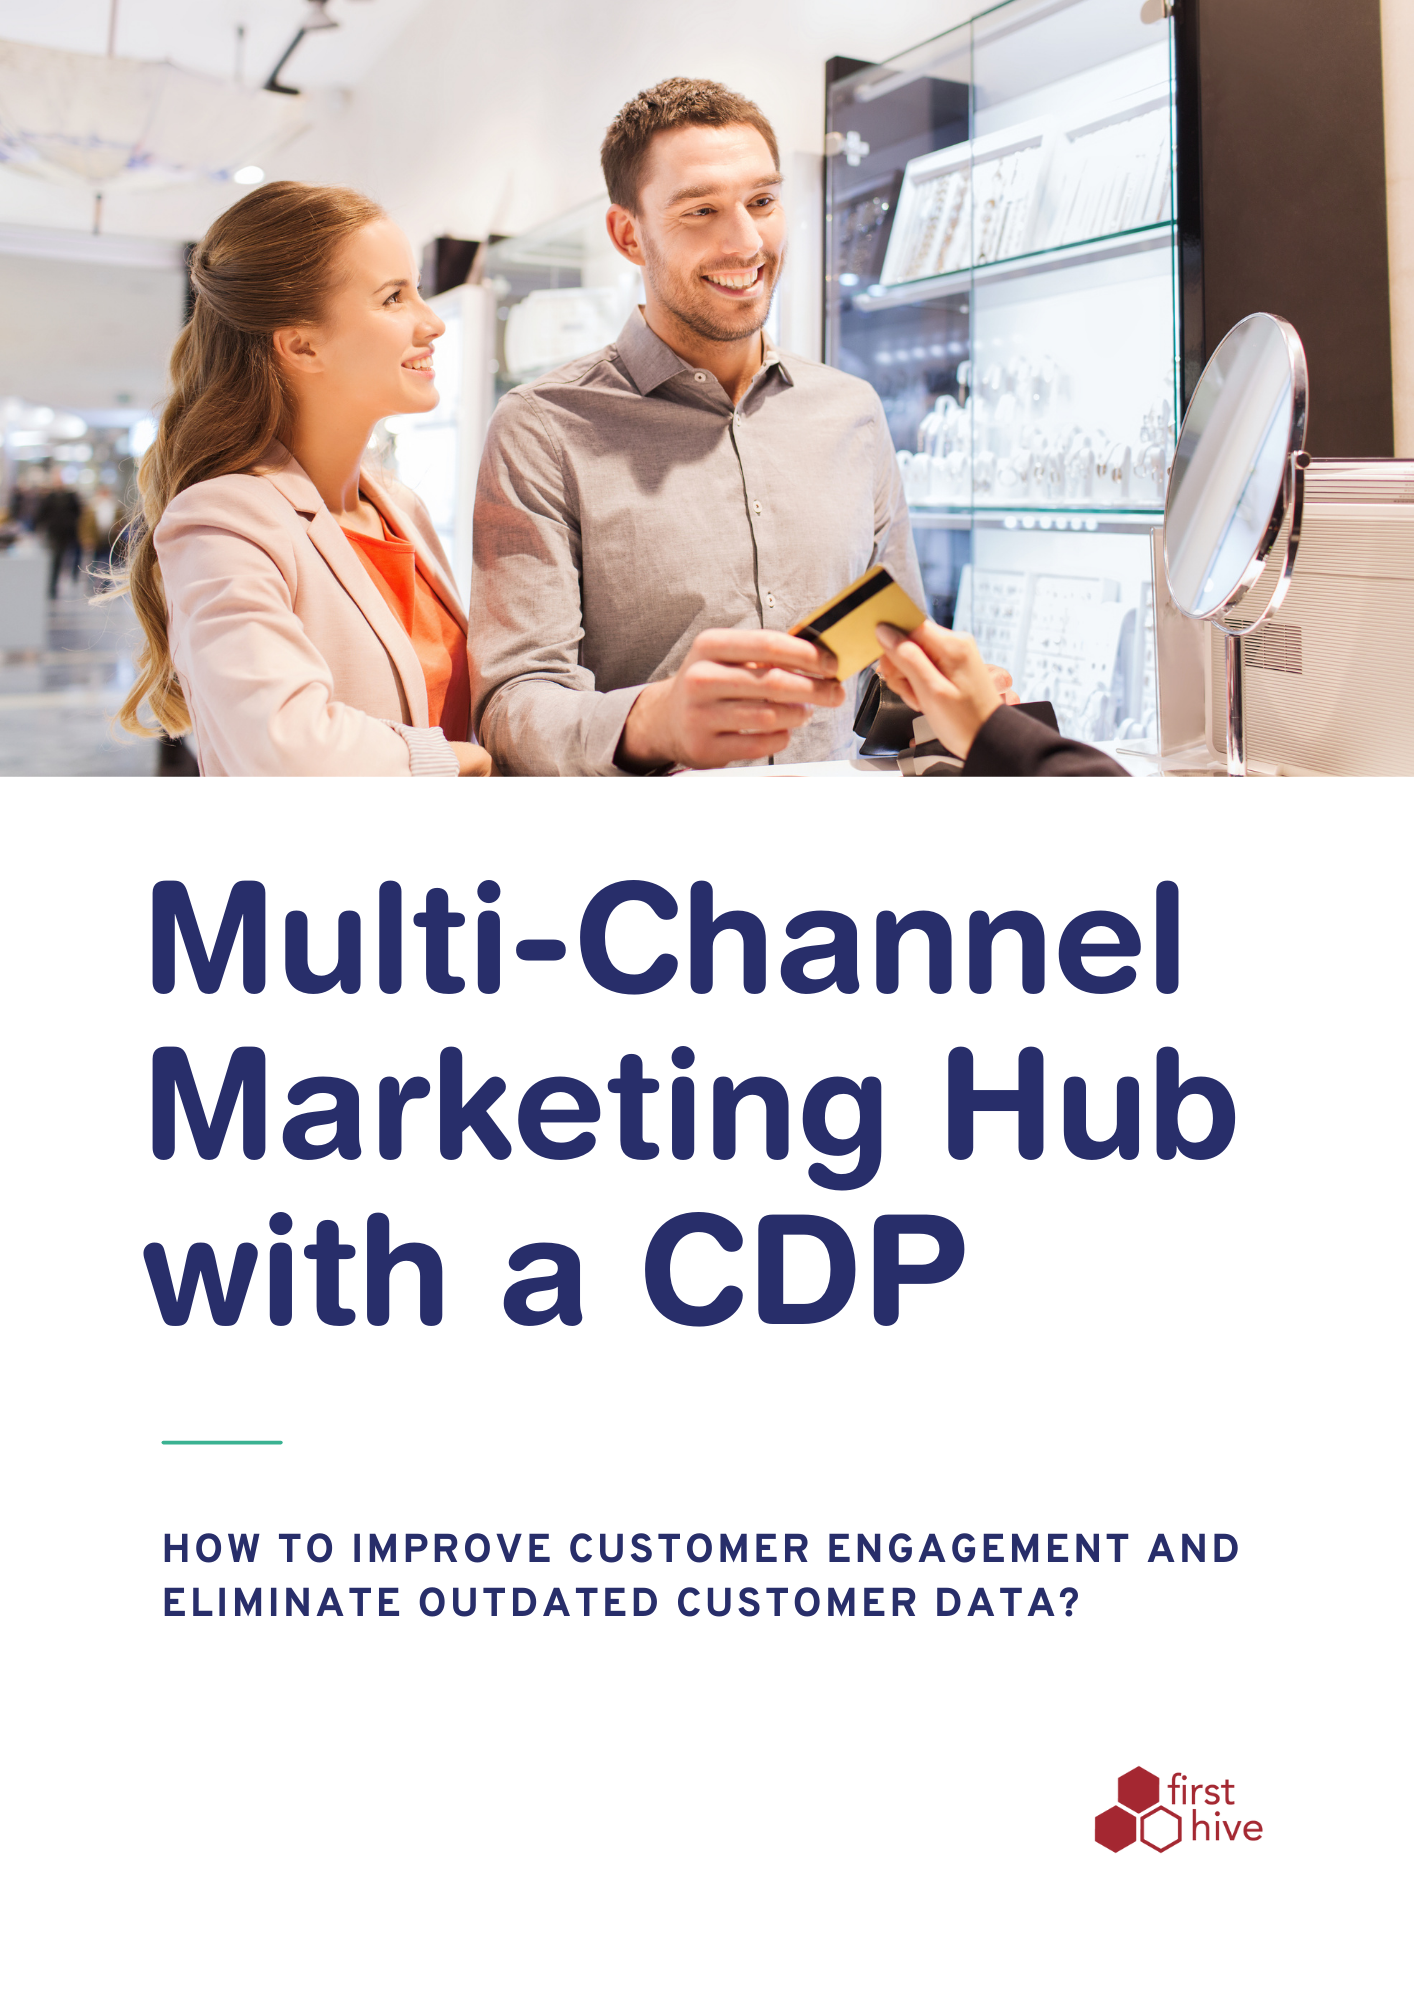 Multi channel marketing hub vs CDP